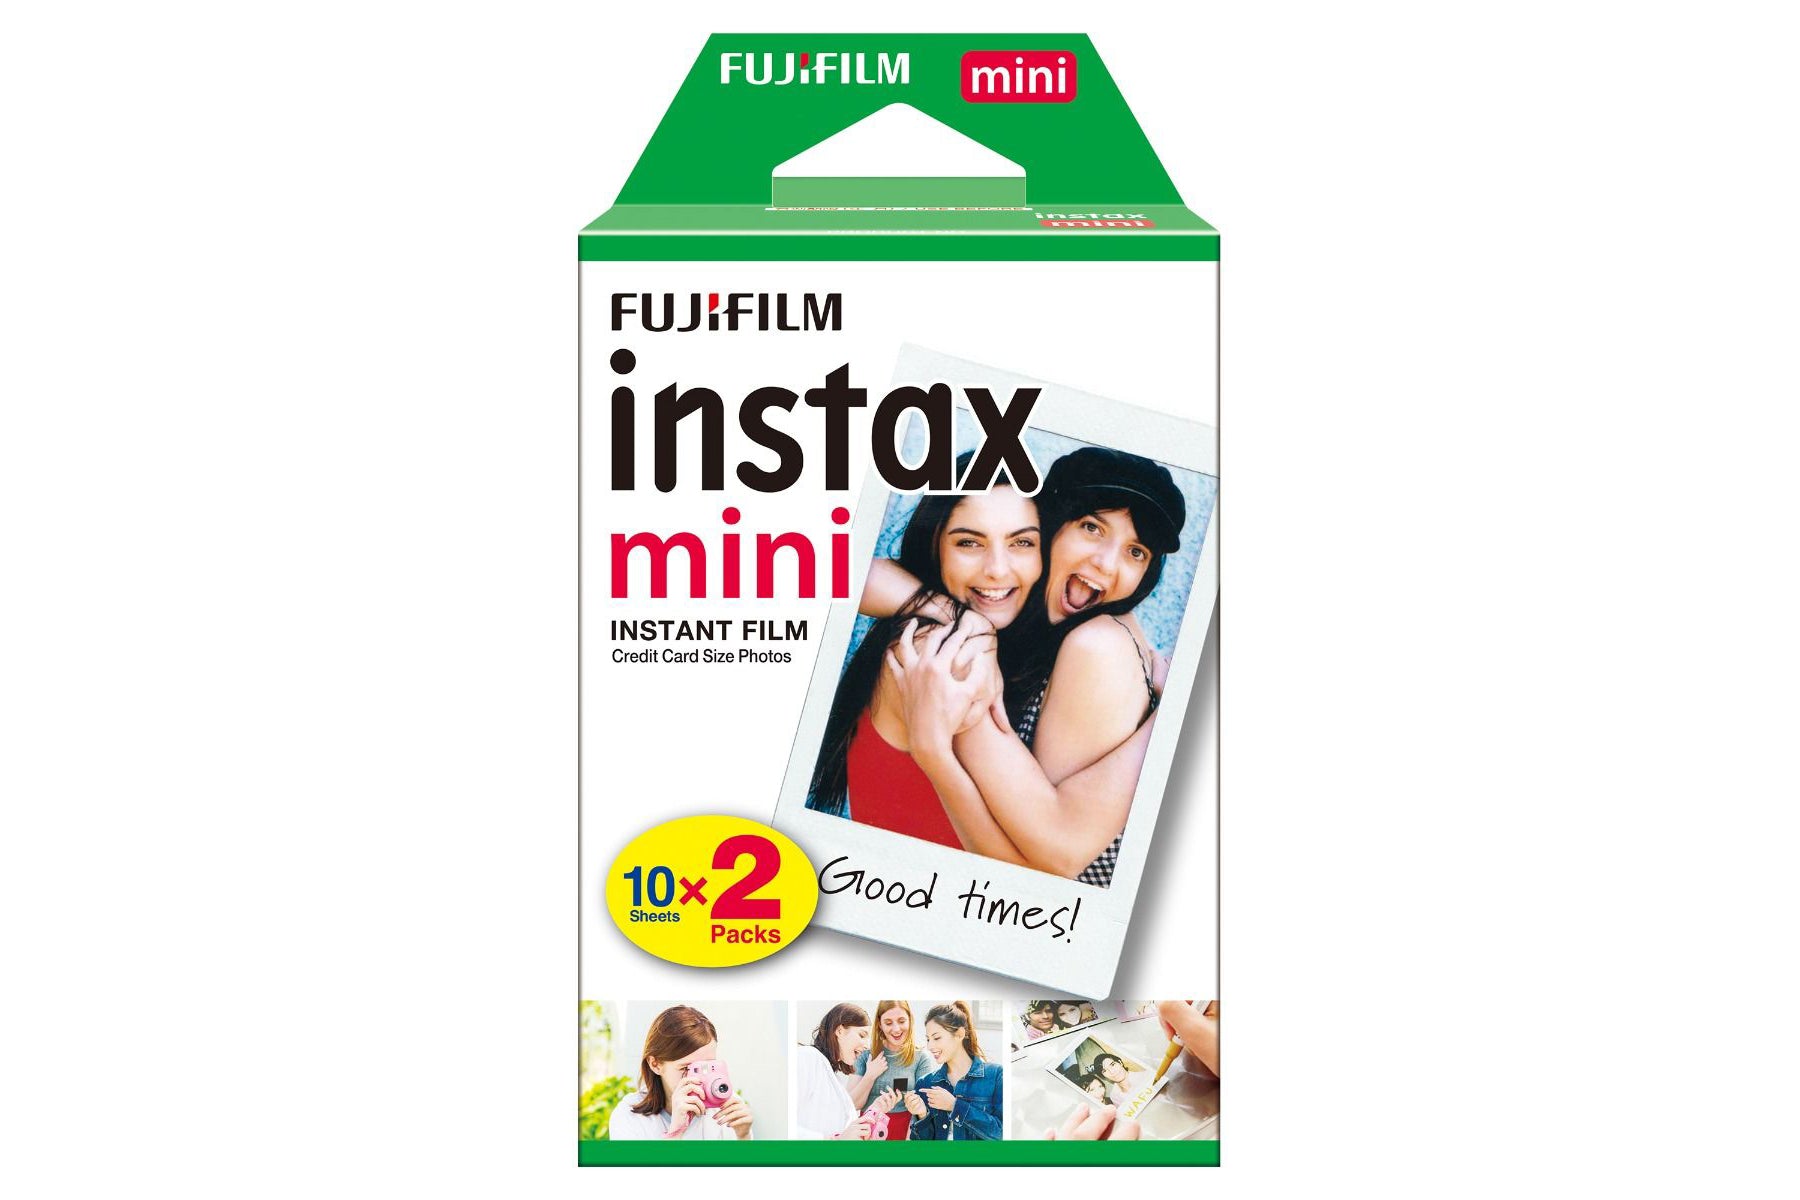 Fujifilm Instax Mini 12 Instant Film Camera (Lilac Purple), Fuji Instax  Film Value Pack 30 Sheets, Protective Case, Instant Camera Gift Bundle